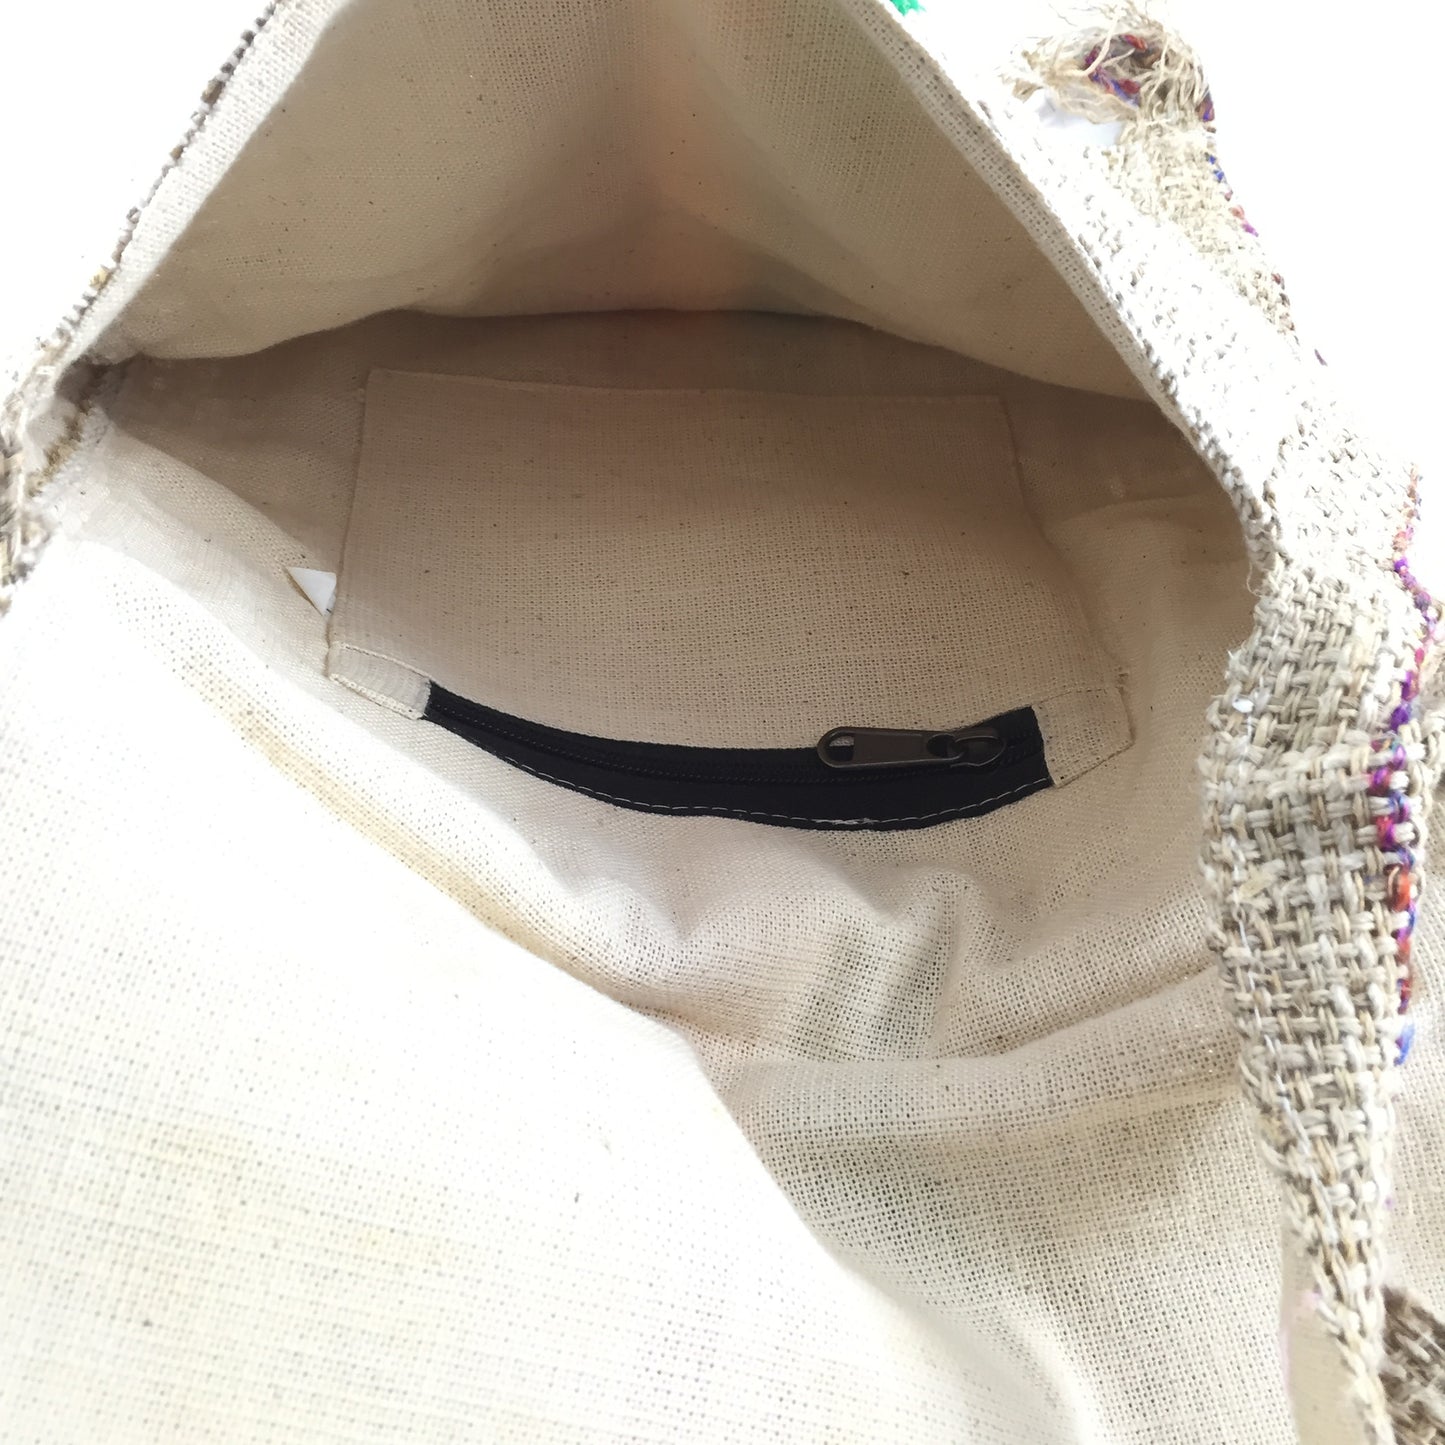 HEMP Rasta Shoulder Bag made from 100% natural, organic and eco-friendly handwoven HEMP